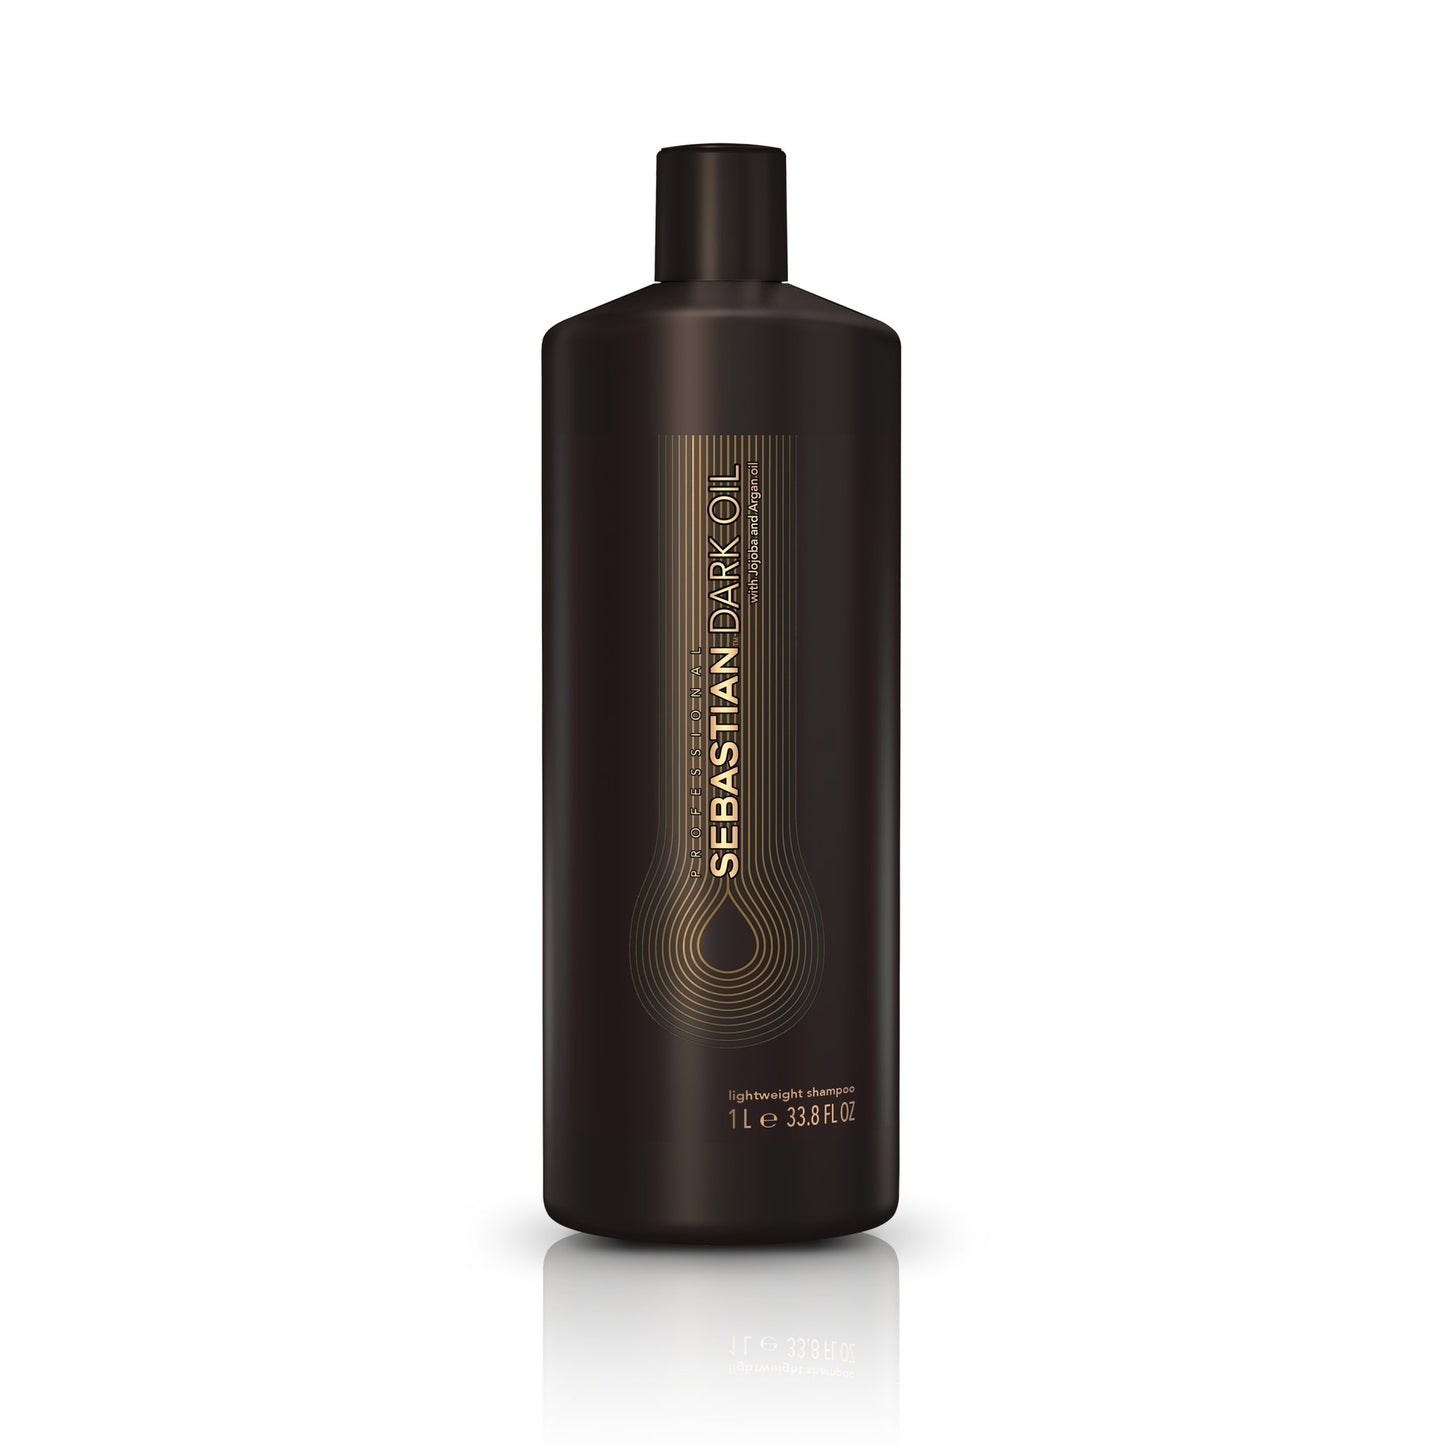 Shampoo | Dark Oil Lightweight | SEBASTIAN - SH Salons